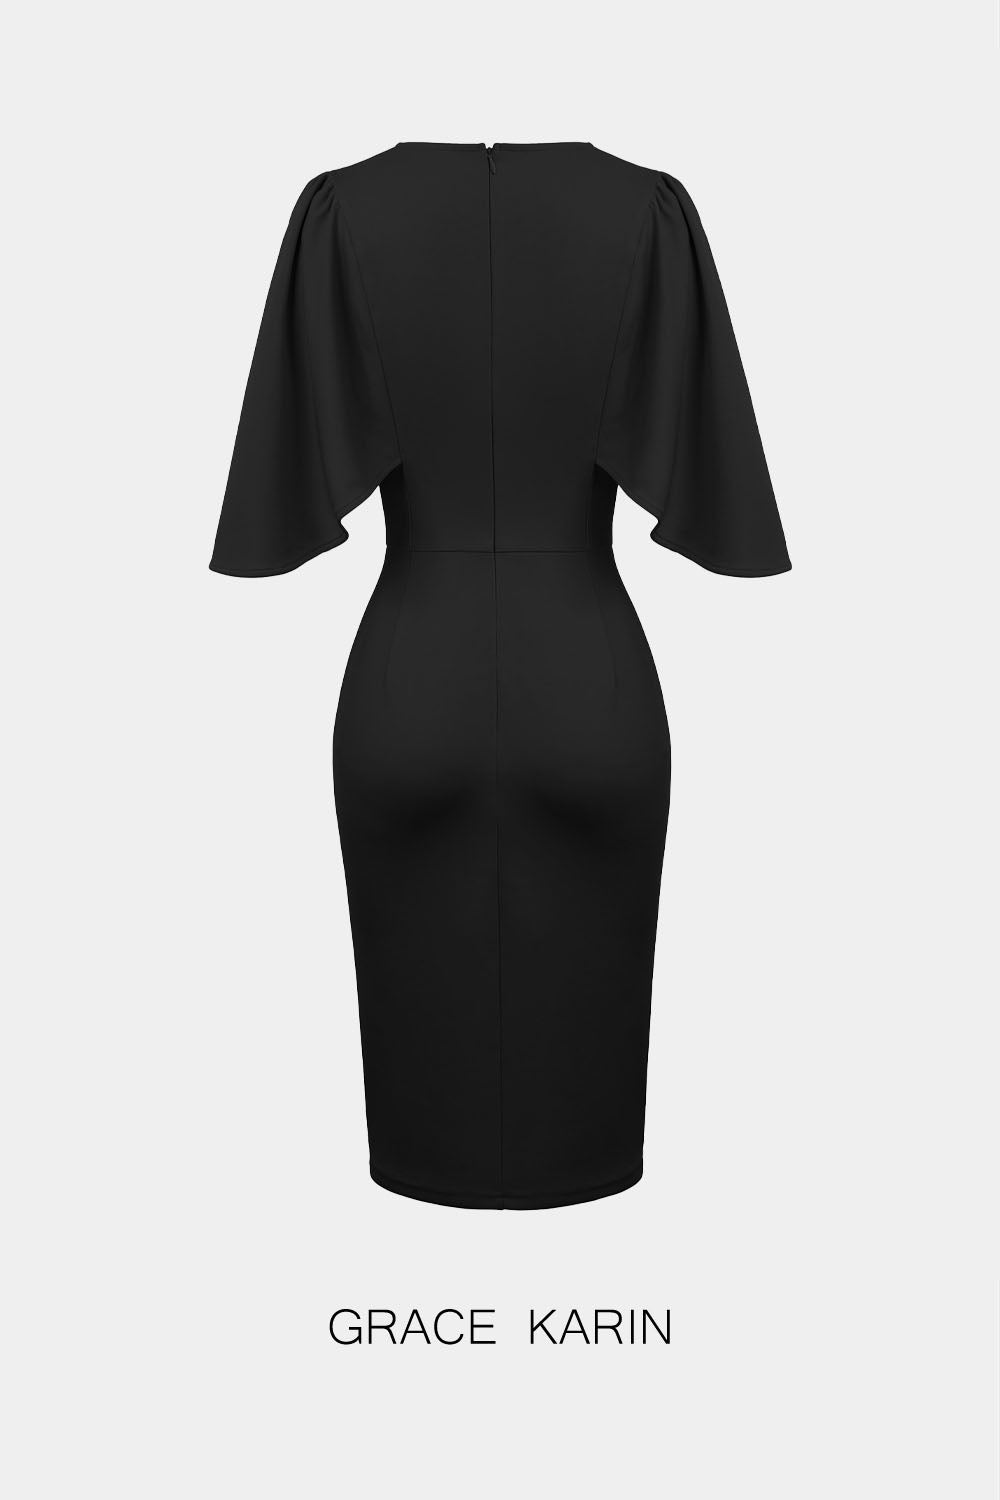 【Only $9.99】GRACE KARIN 3/4 Ruffle Sleeve Bodycon Dress